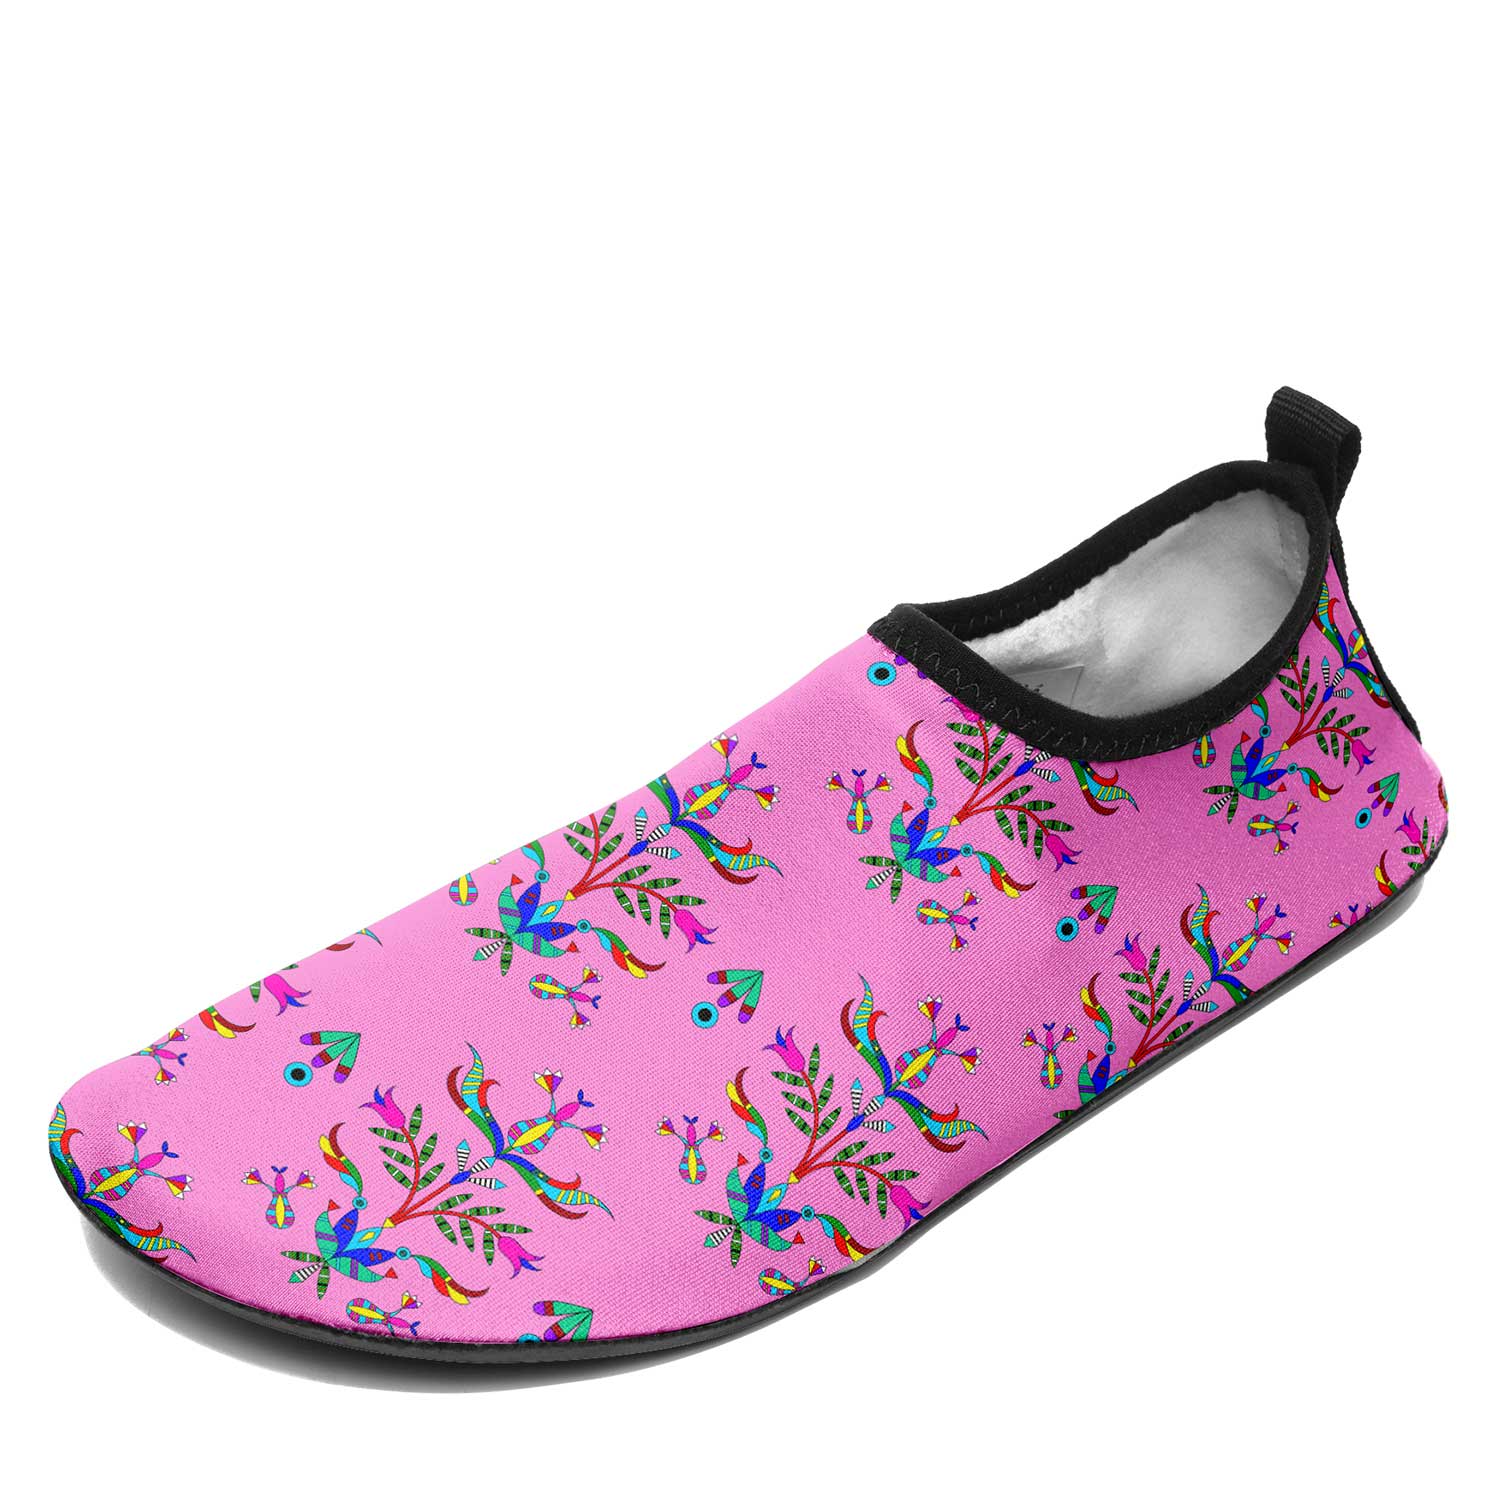 Dakota Damask Cheyenne Pink Kid's Sockamoccs Slip On Shoes